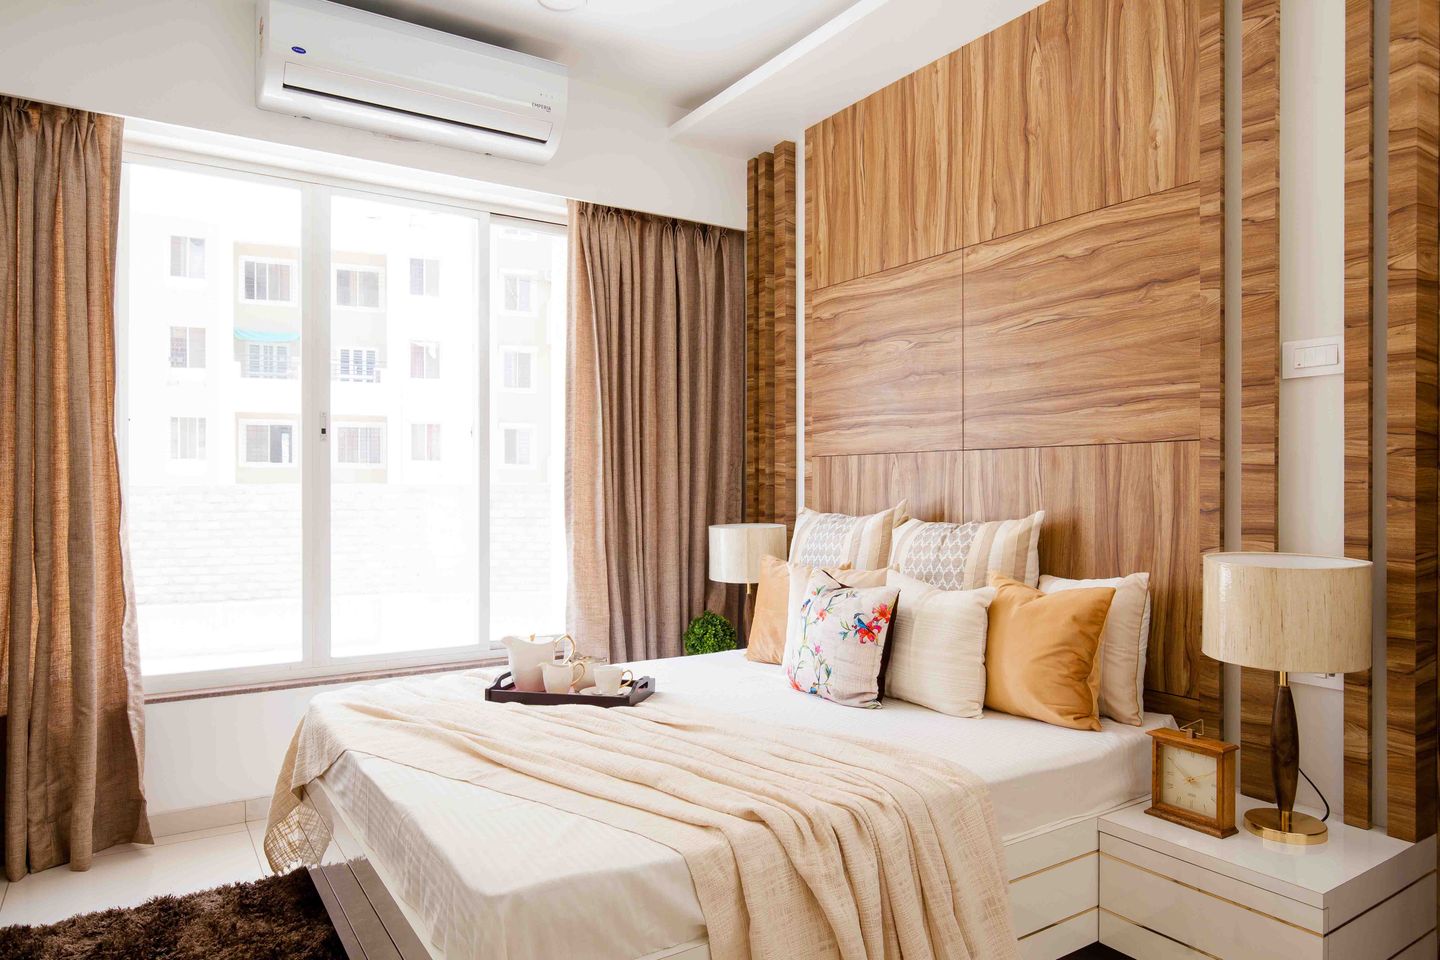 Master Bedroom Design With Wooden Headboard Wall - Livspace